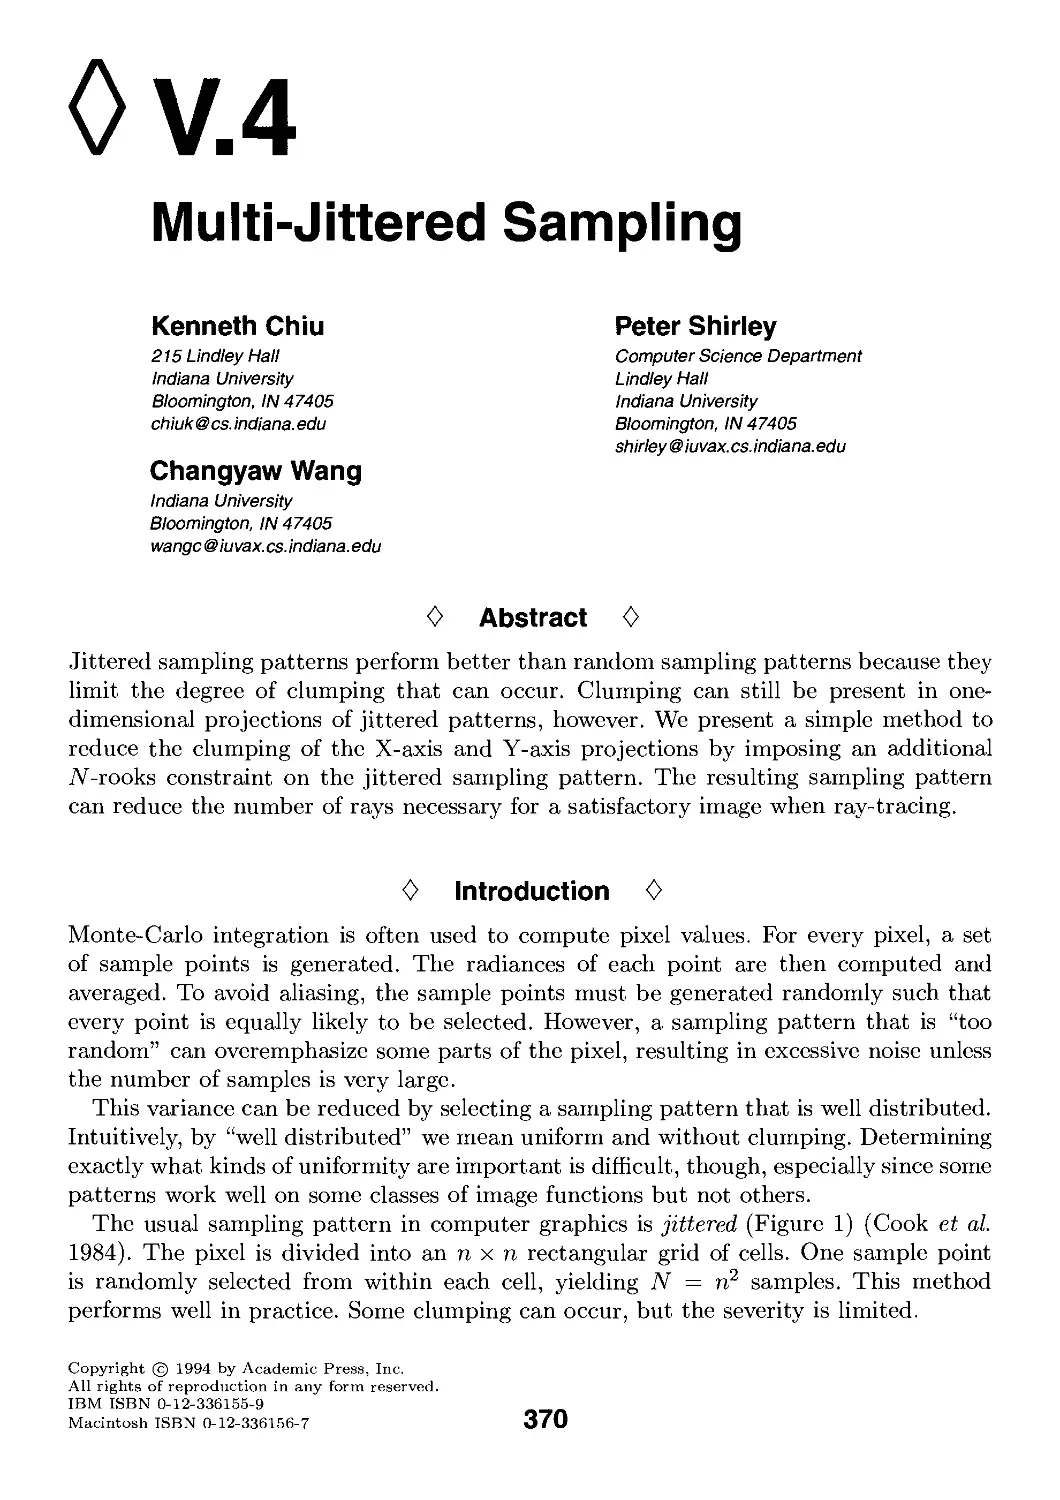 V.4. Multi-Jittered Sampling by Kenneth Chiu, Peter Shirley and  Changyaw Wang